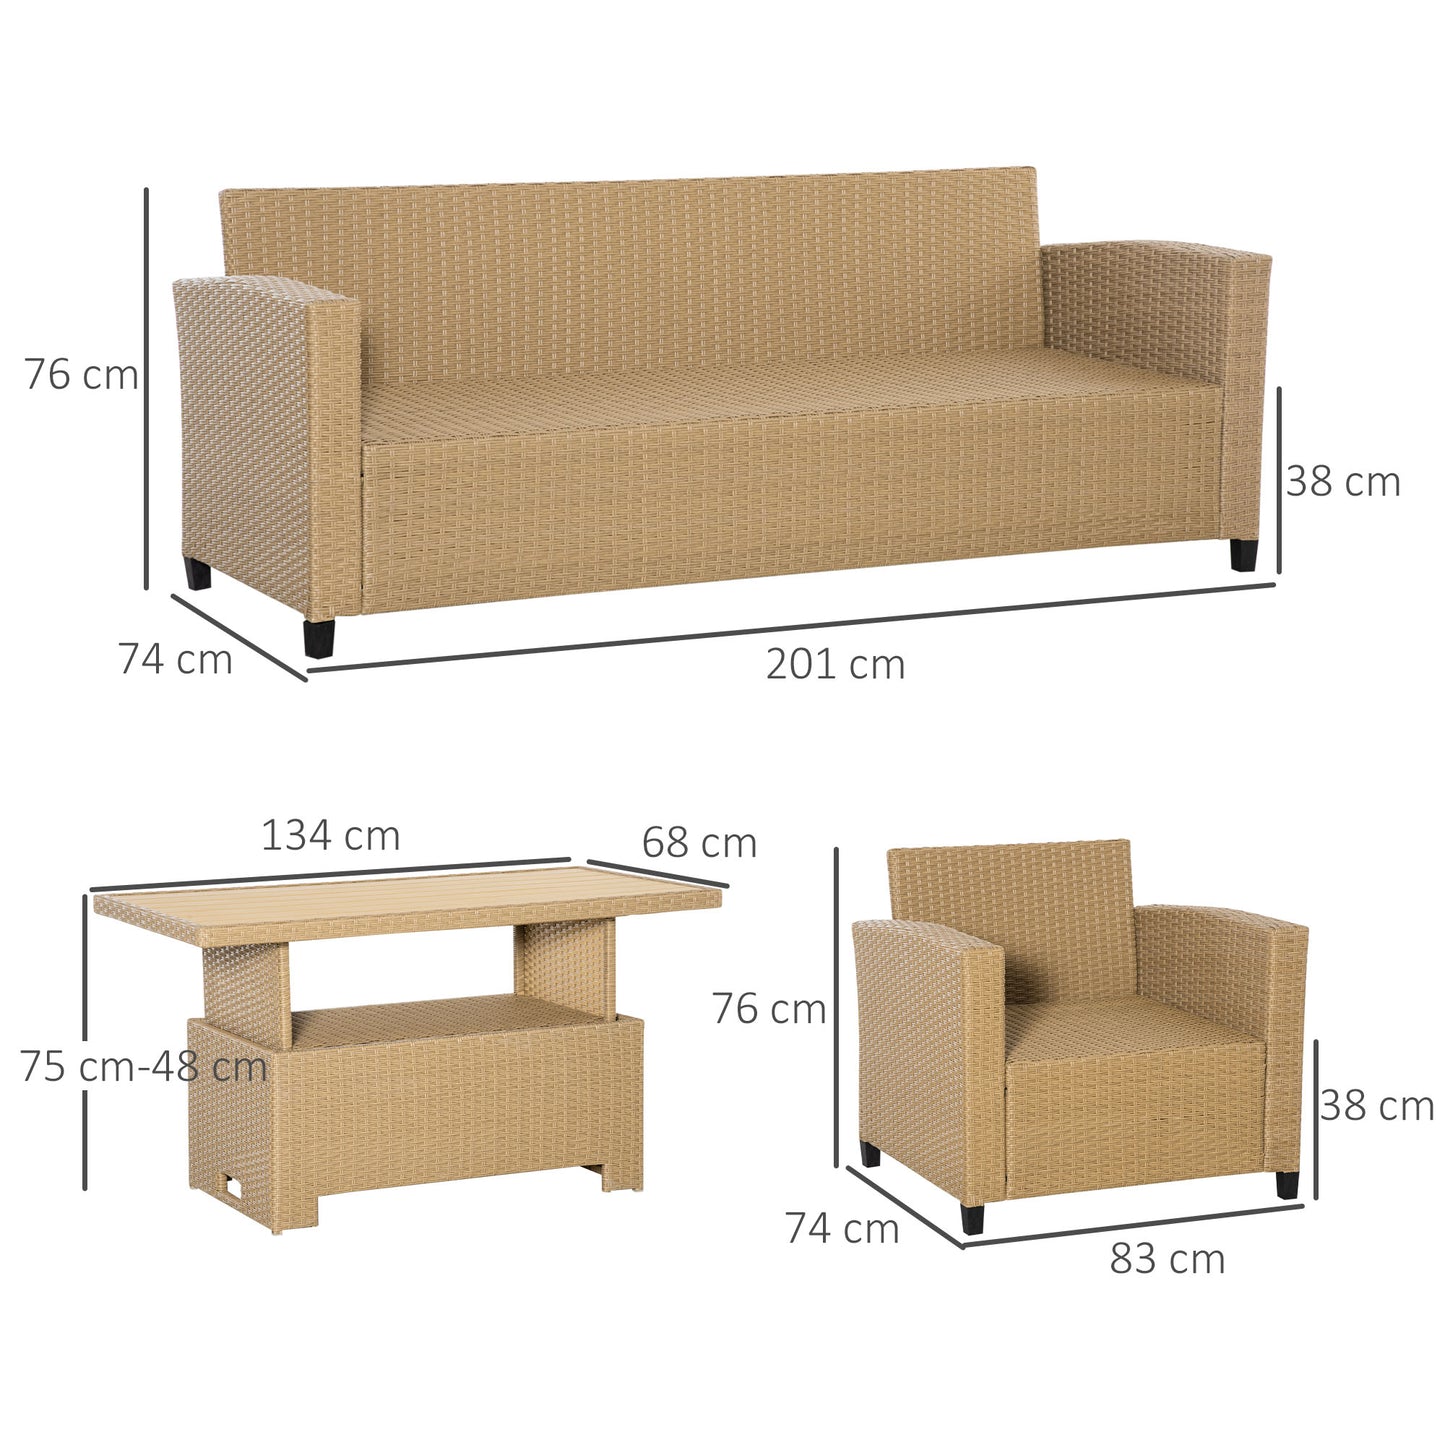 Outsunny Rattan Garden Sofa Set, 5-Seater Patio Conversation Set with Aluminium Frame & Wood Effect Table, Grey